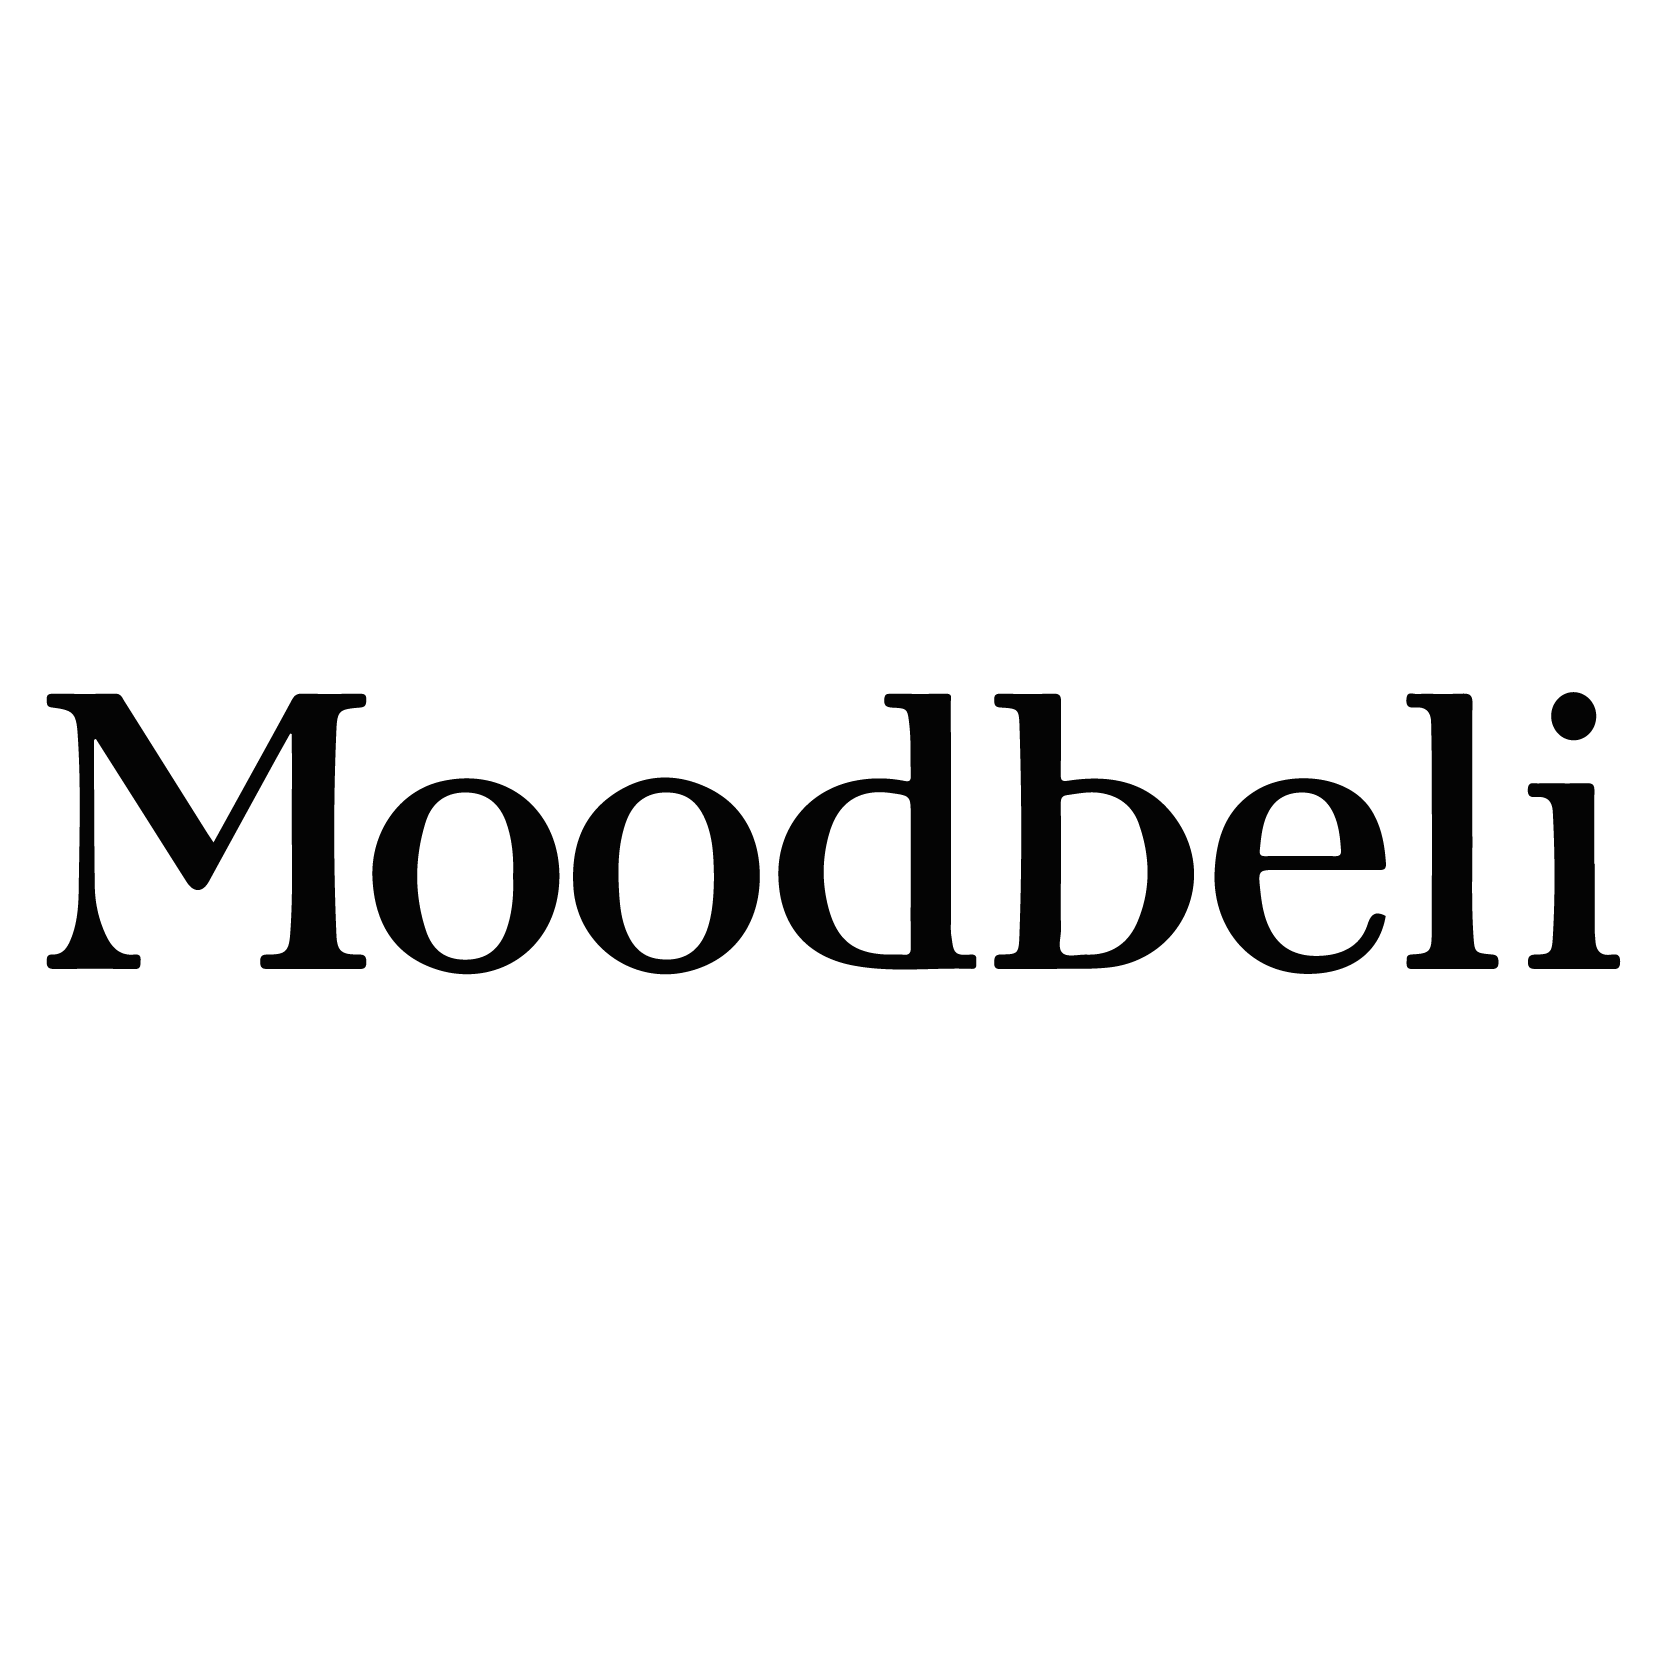 Moodbeli logo-01-01